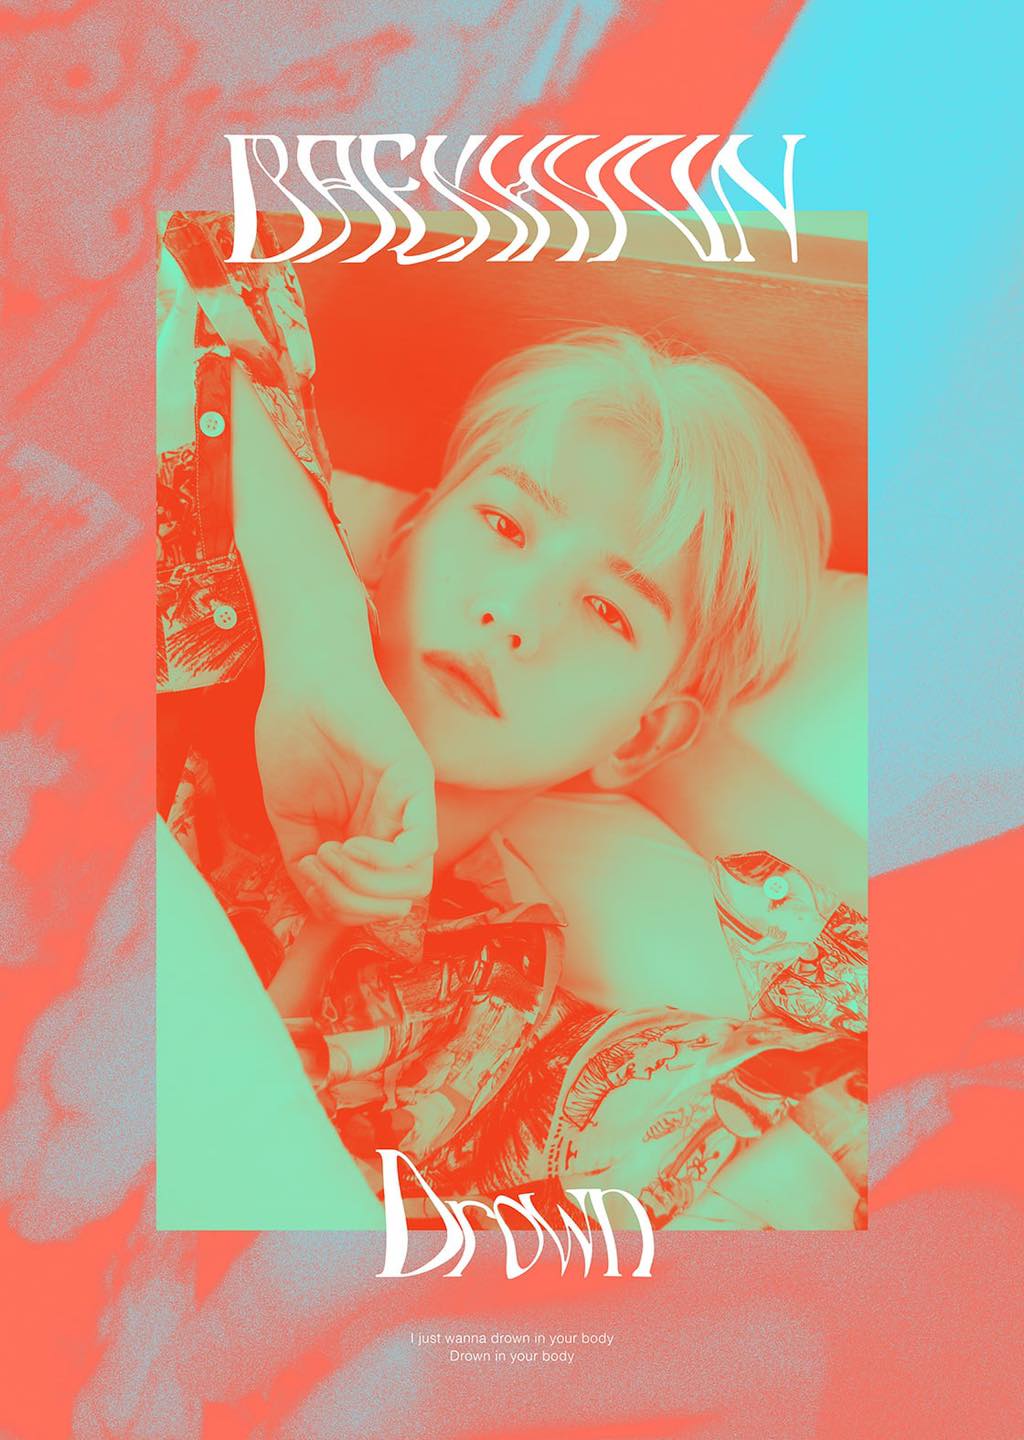 exo-baekhyun-to-make-solo-debut-in-japan-with-mini-album-baekhyun-on-january-20